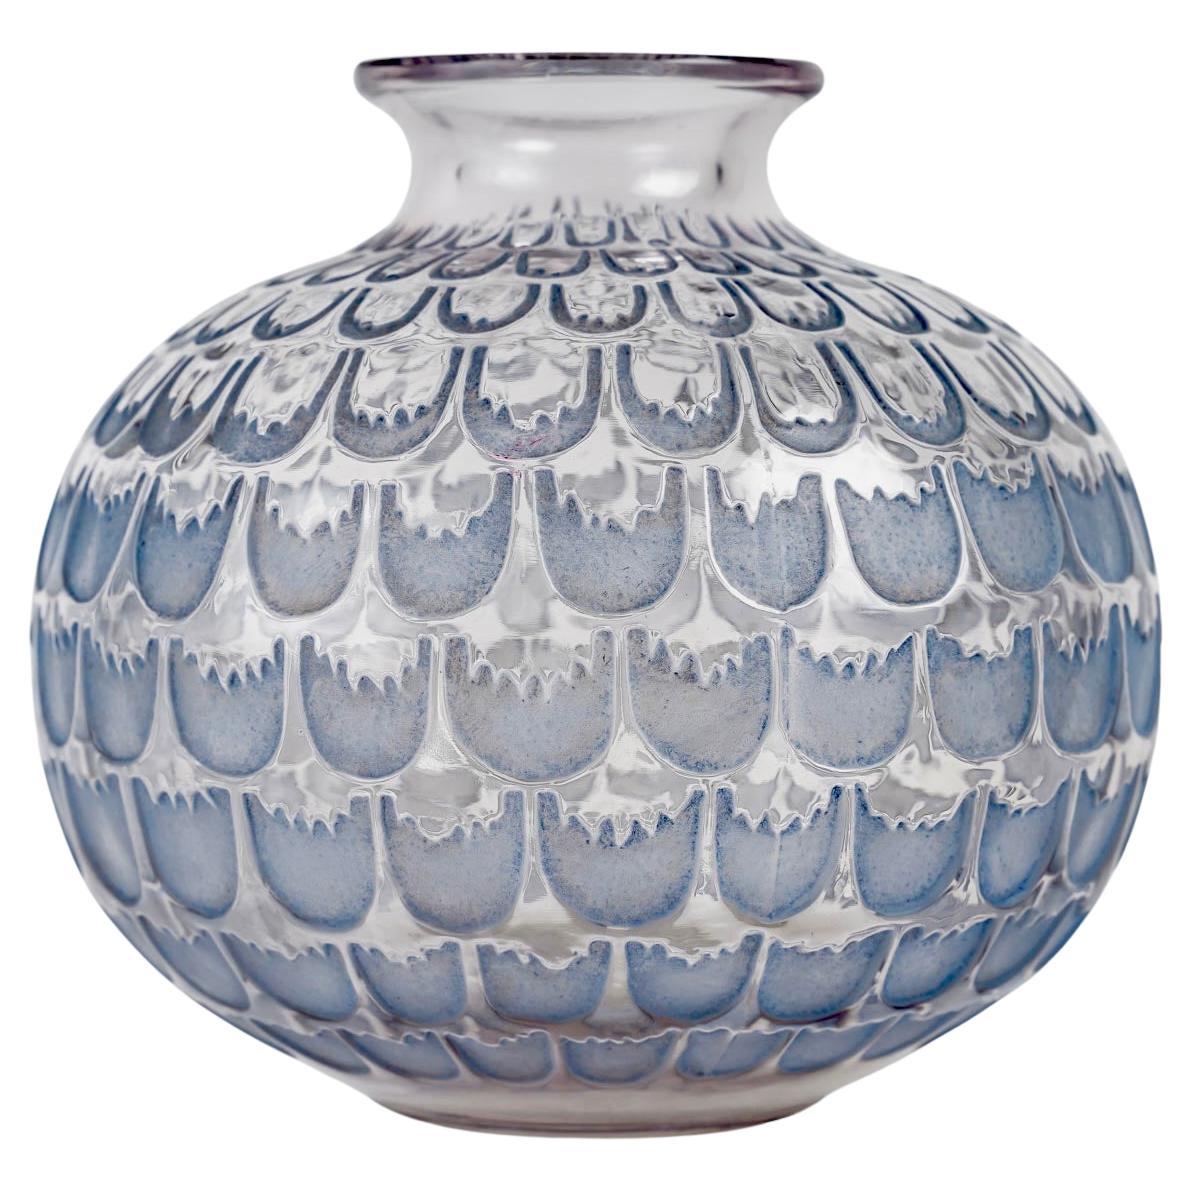 1930 Rene Lalique Vase Grenade Verre clair avec Patina bleue